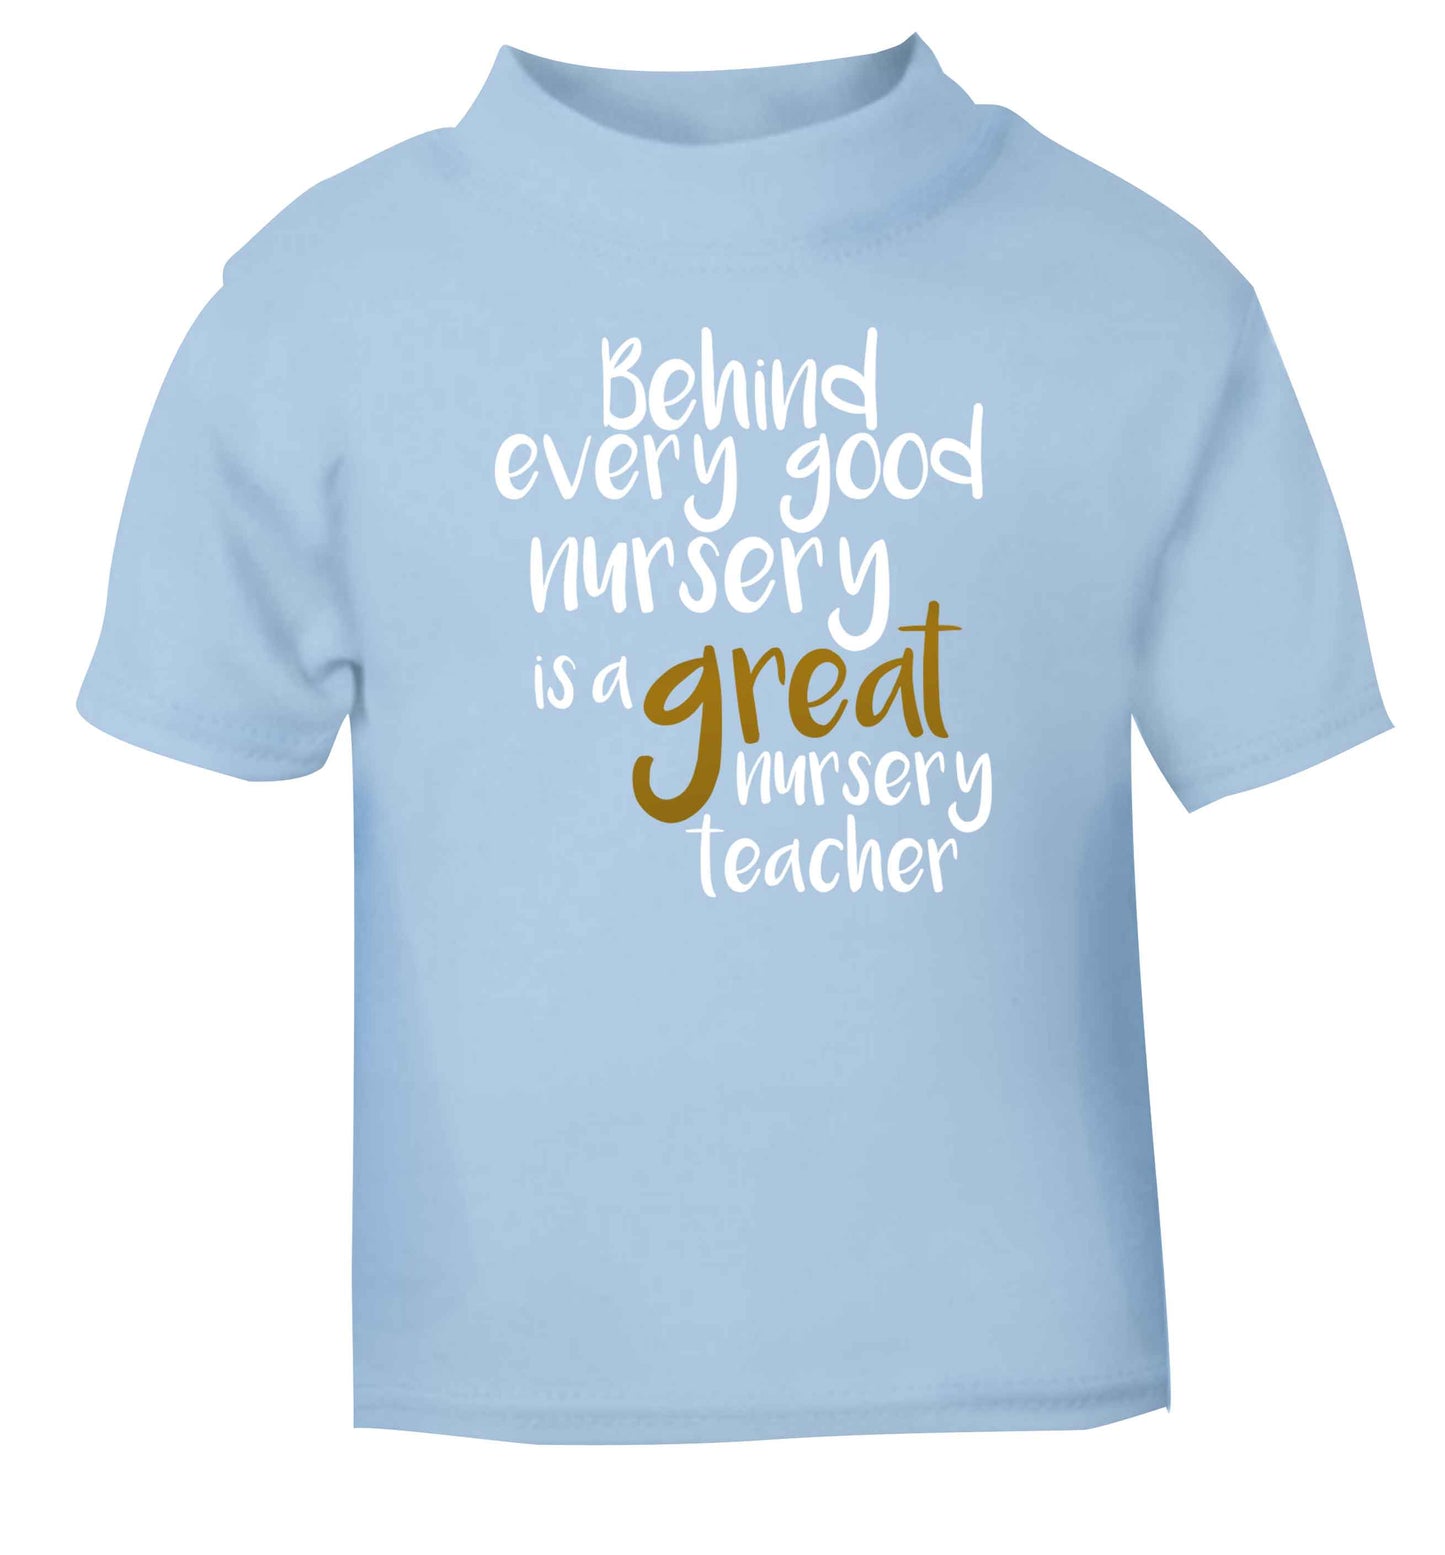 Behind every good nursery is a great nursery teacher light blue Baby Toddler Tshirt 2 Years